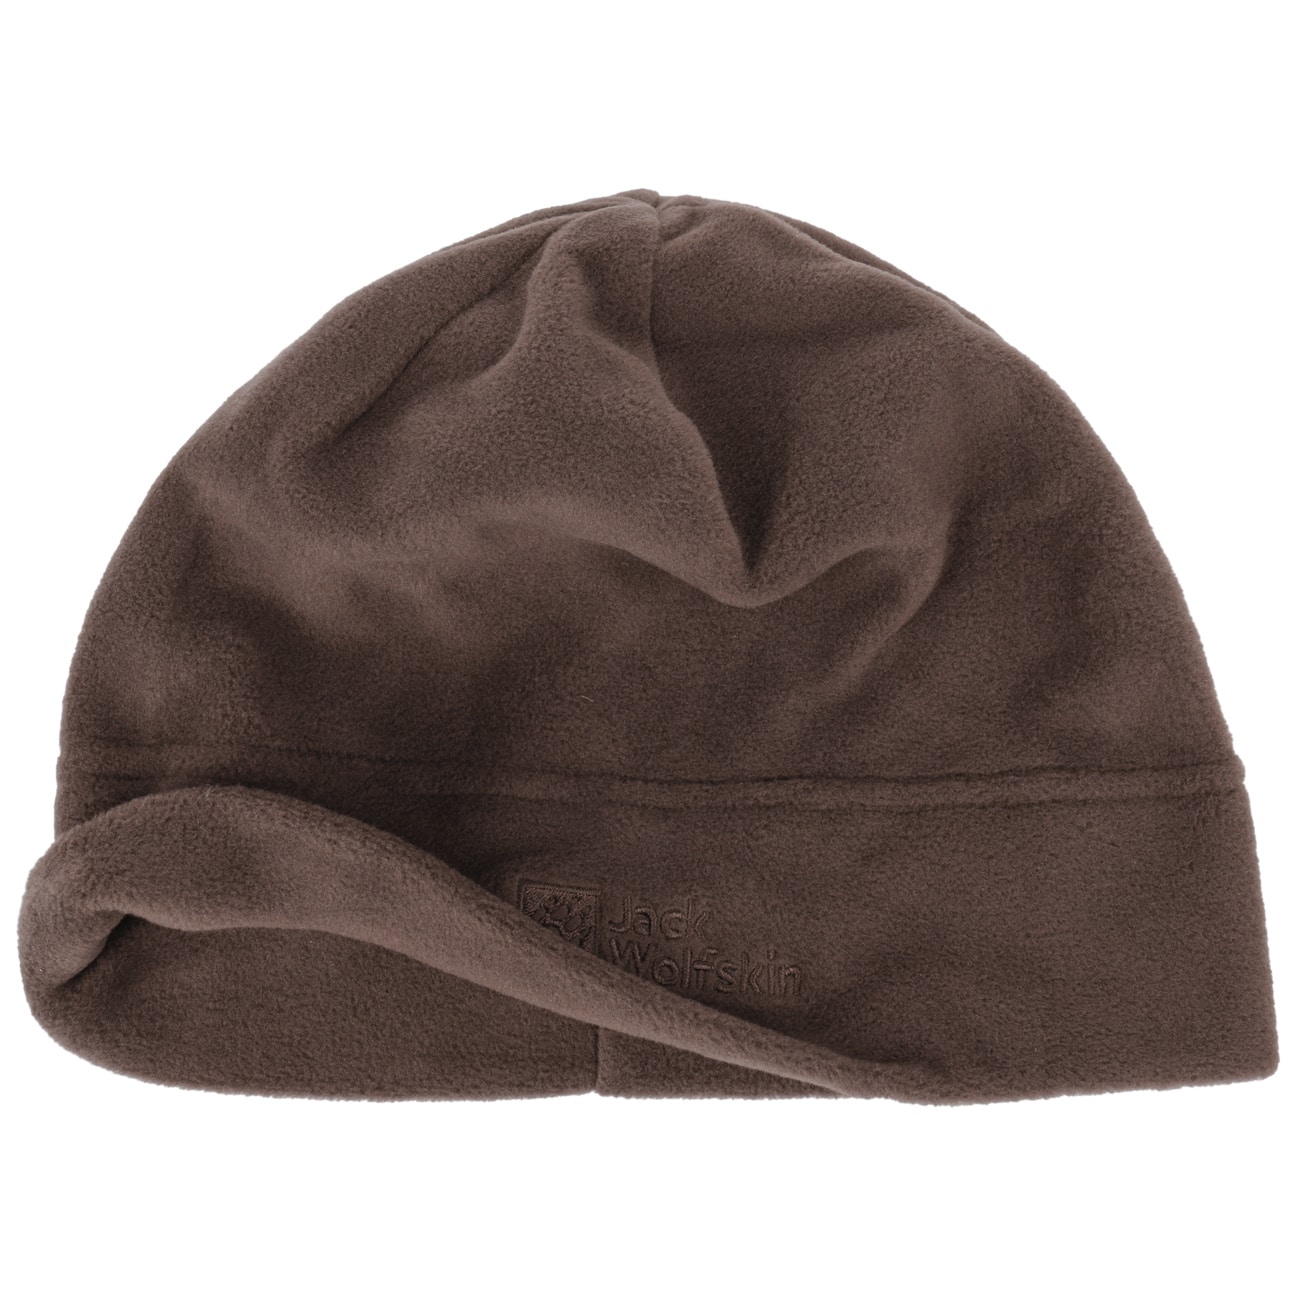 Caps Beanies online Shop Hatshopping Stuff ▷ by Jack Wolfskin & --> Hats, Beanie Hat Real